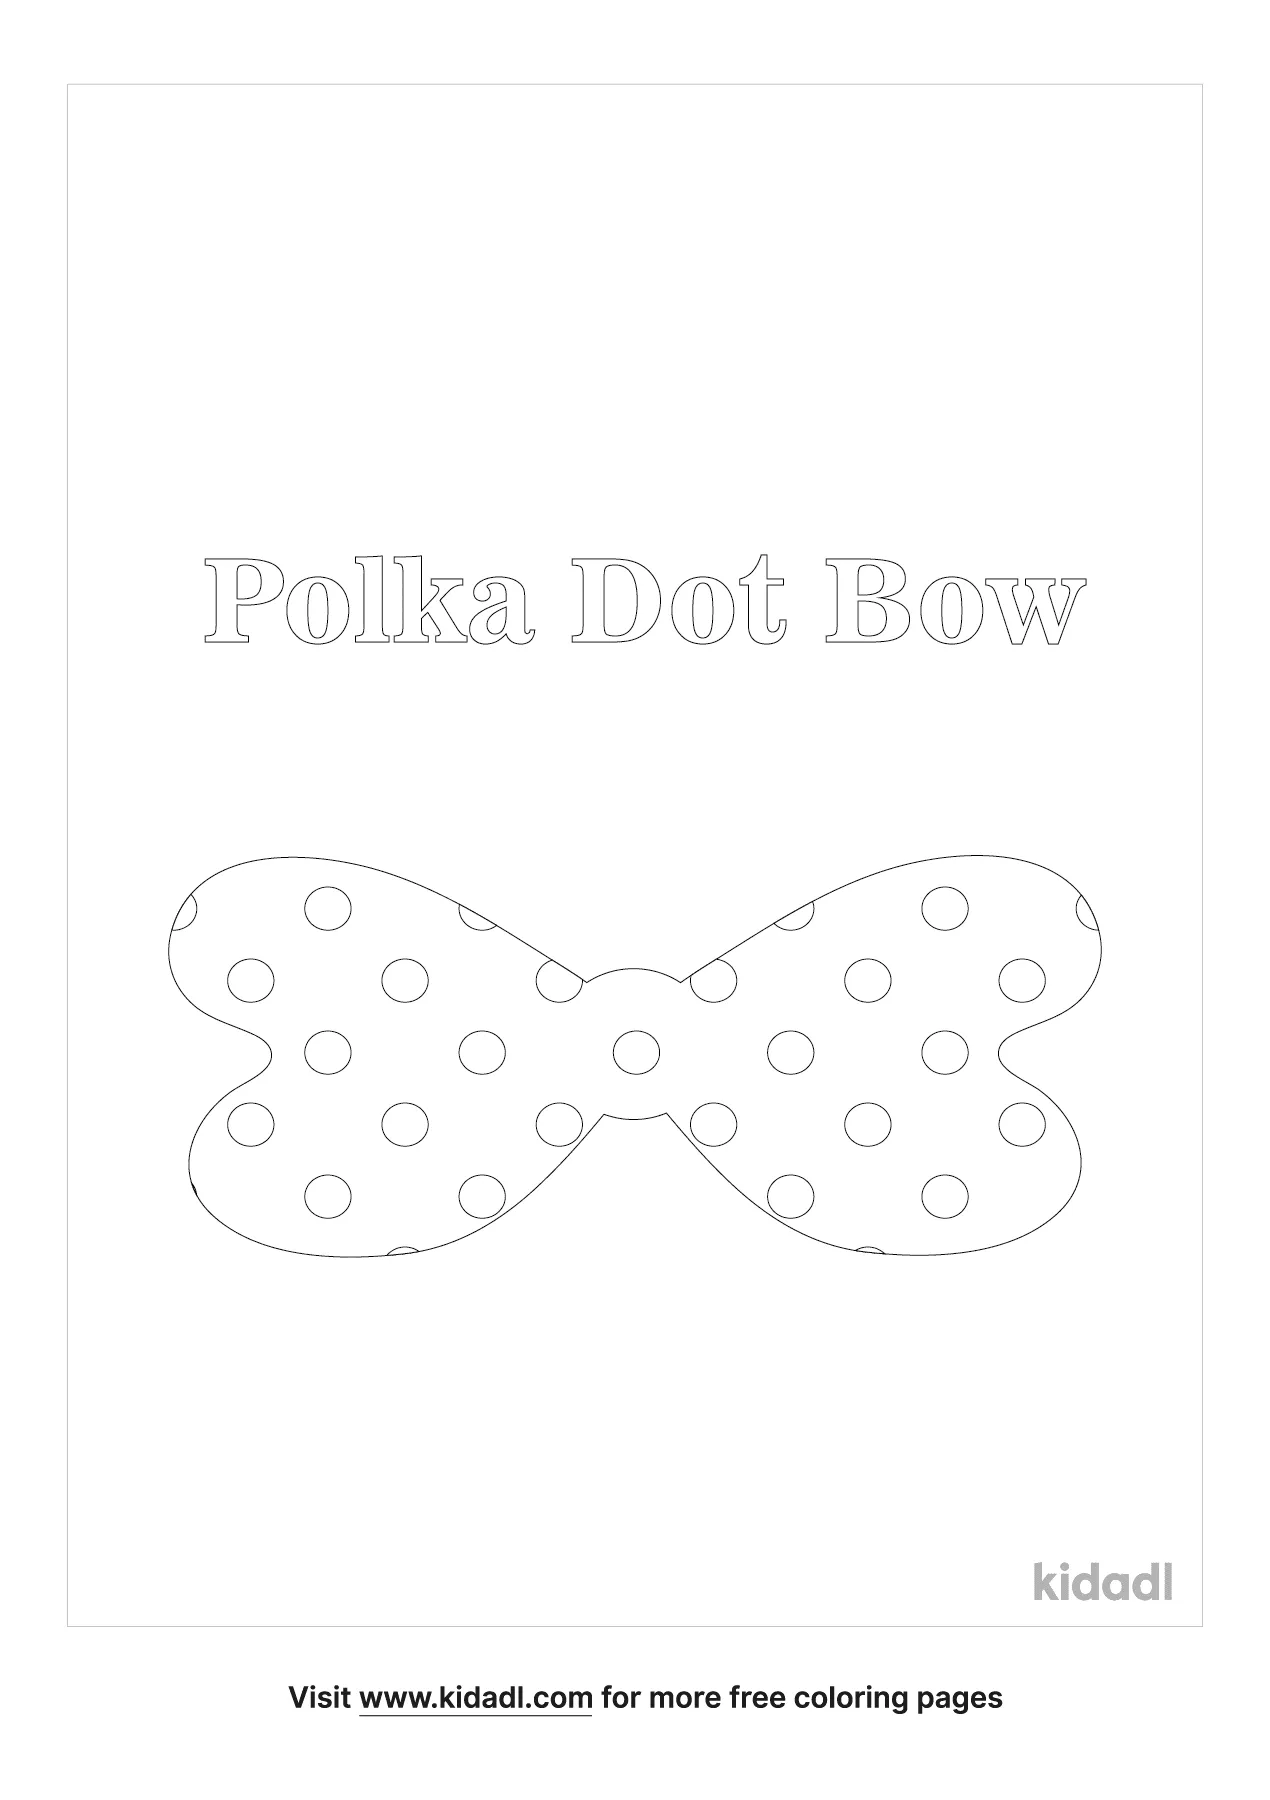 Free polka dot bow coloring page coloring page printables